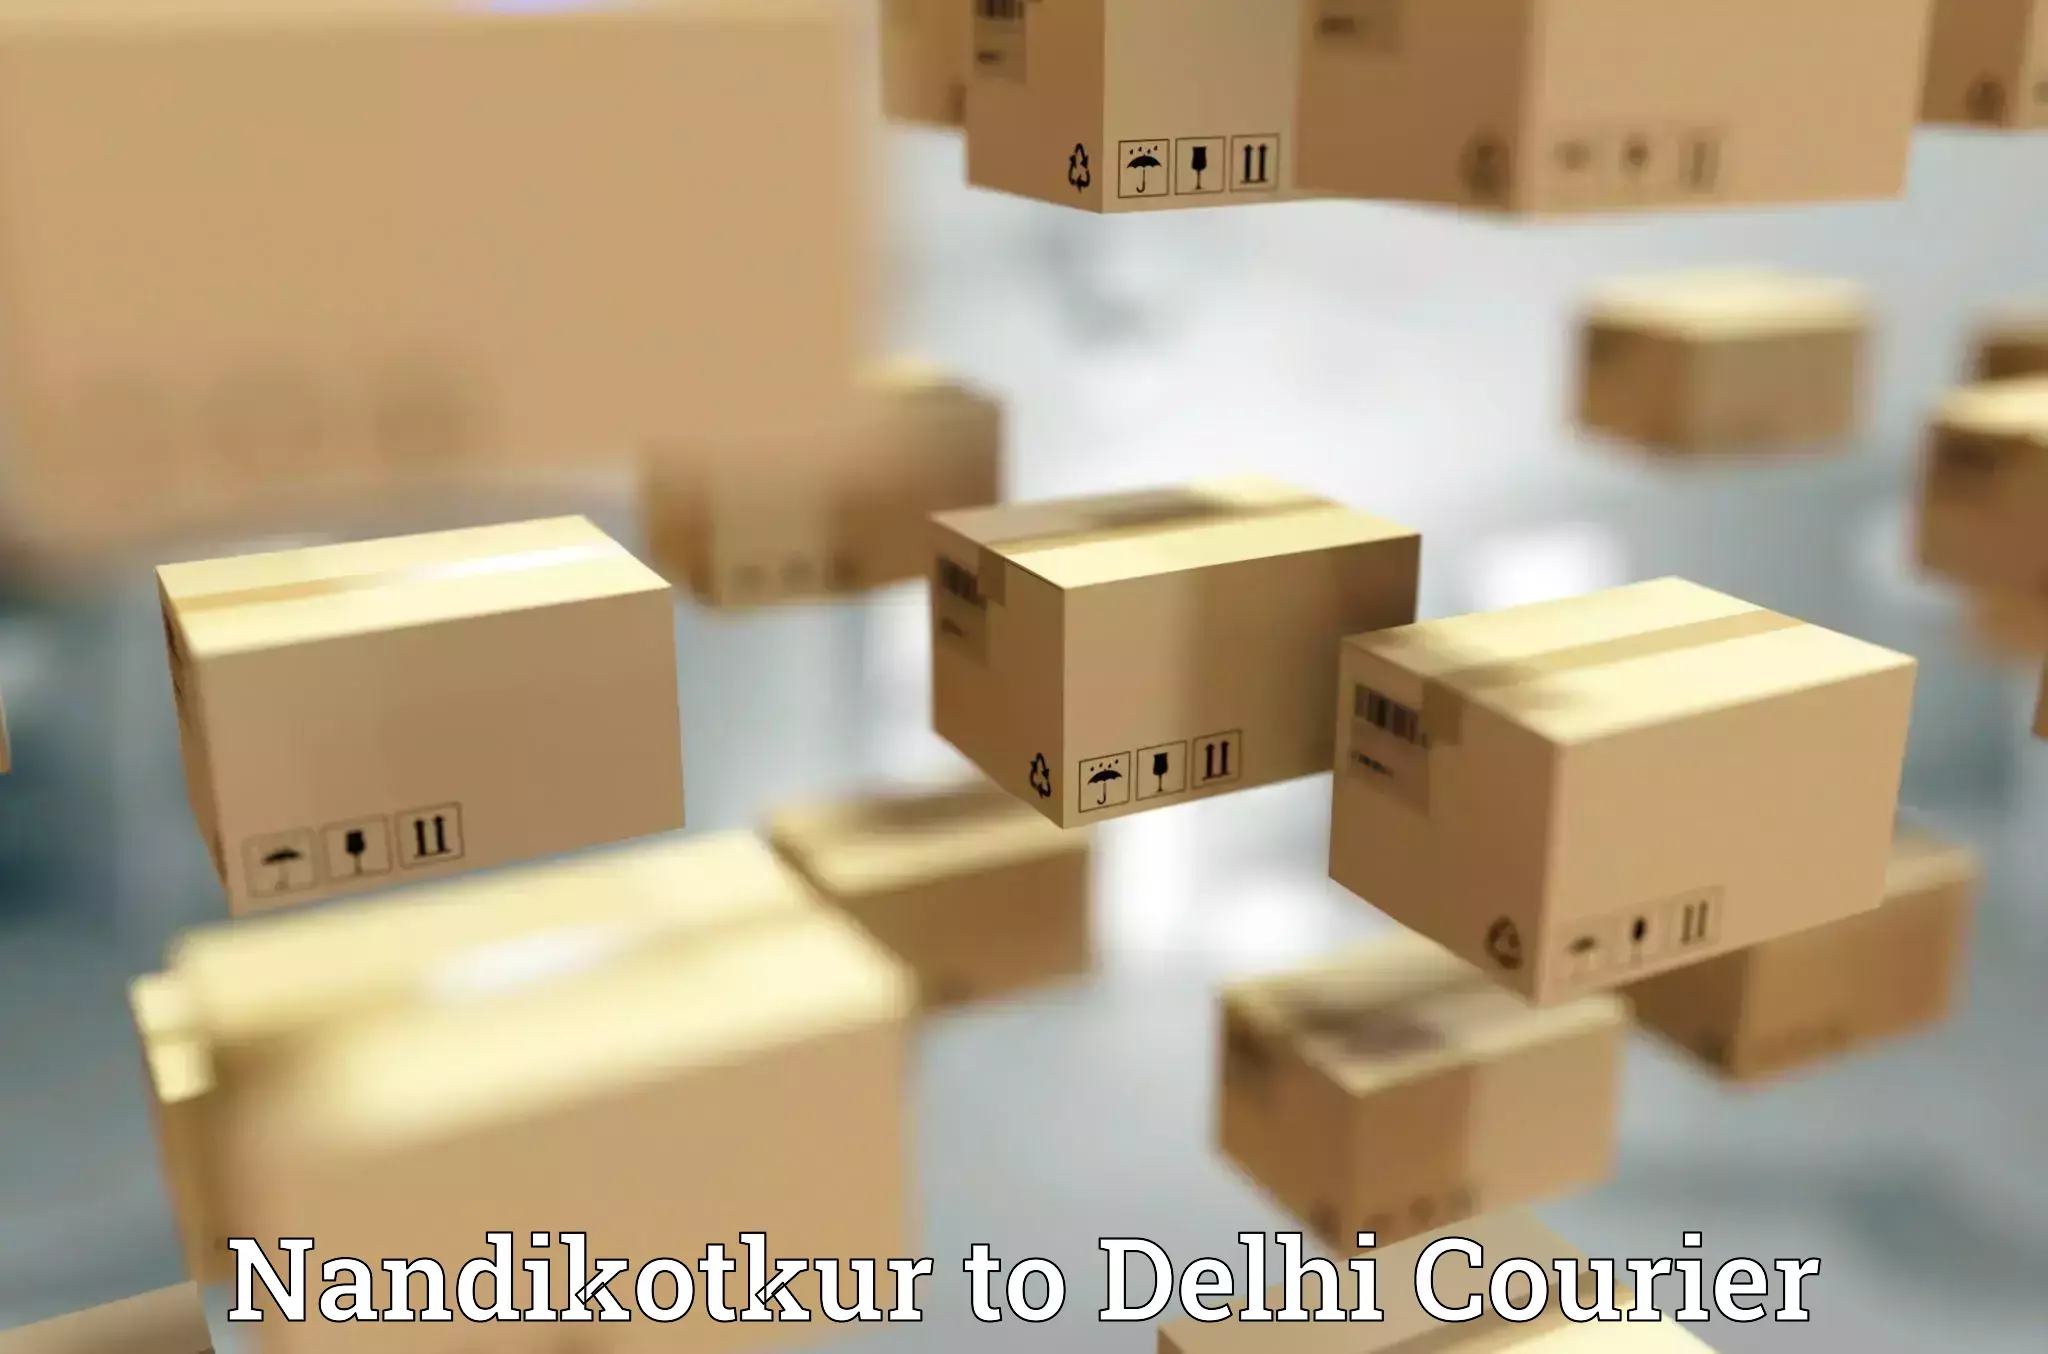 Digital courier platforms Nandikotkur to Delhi